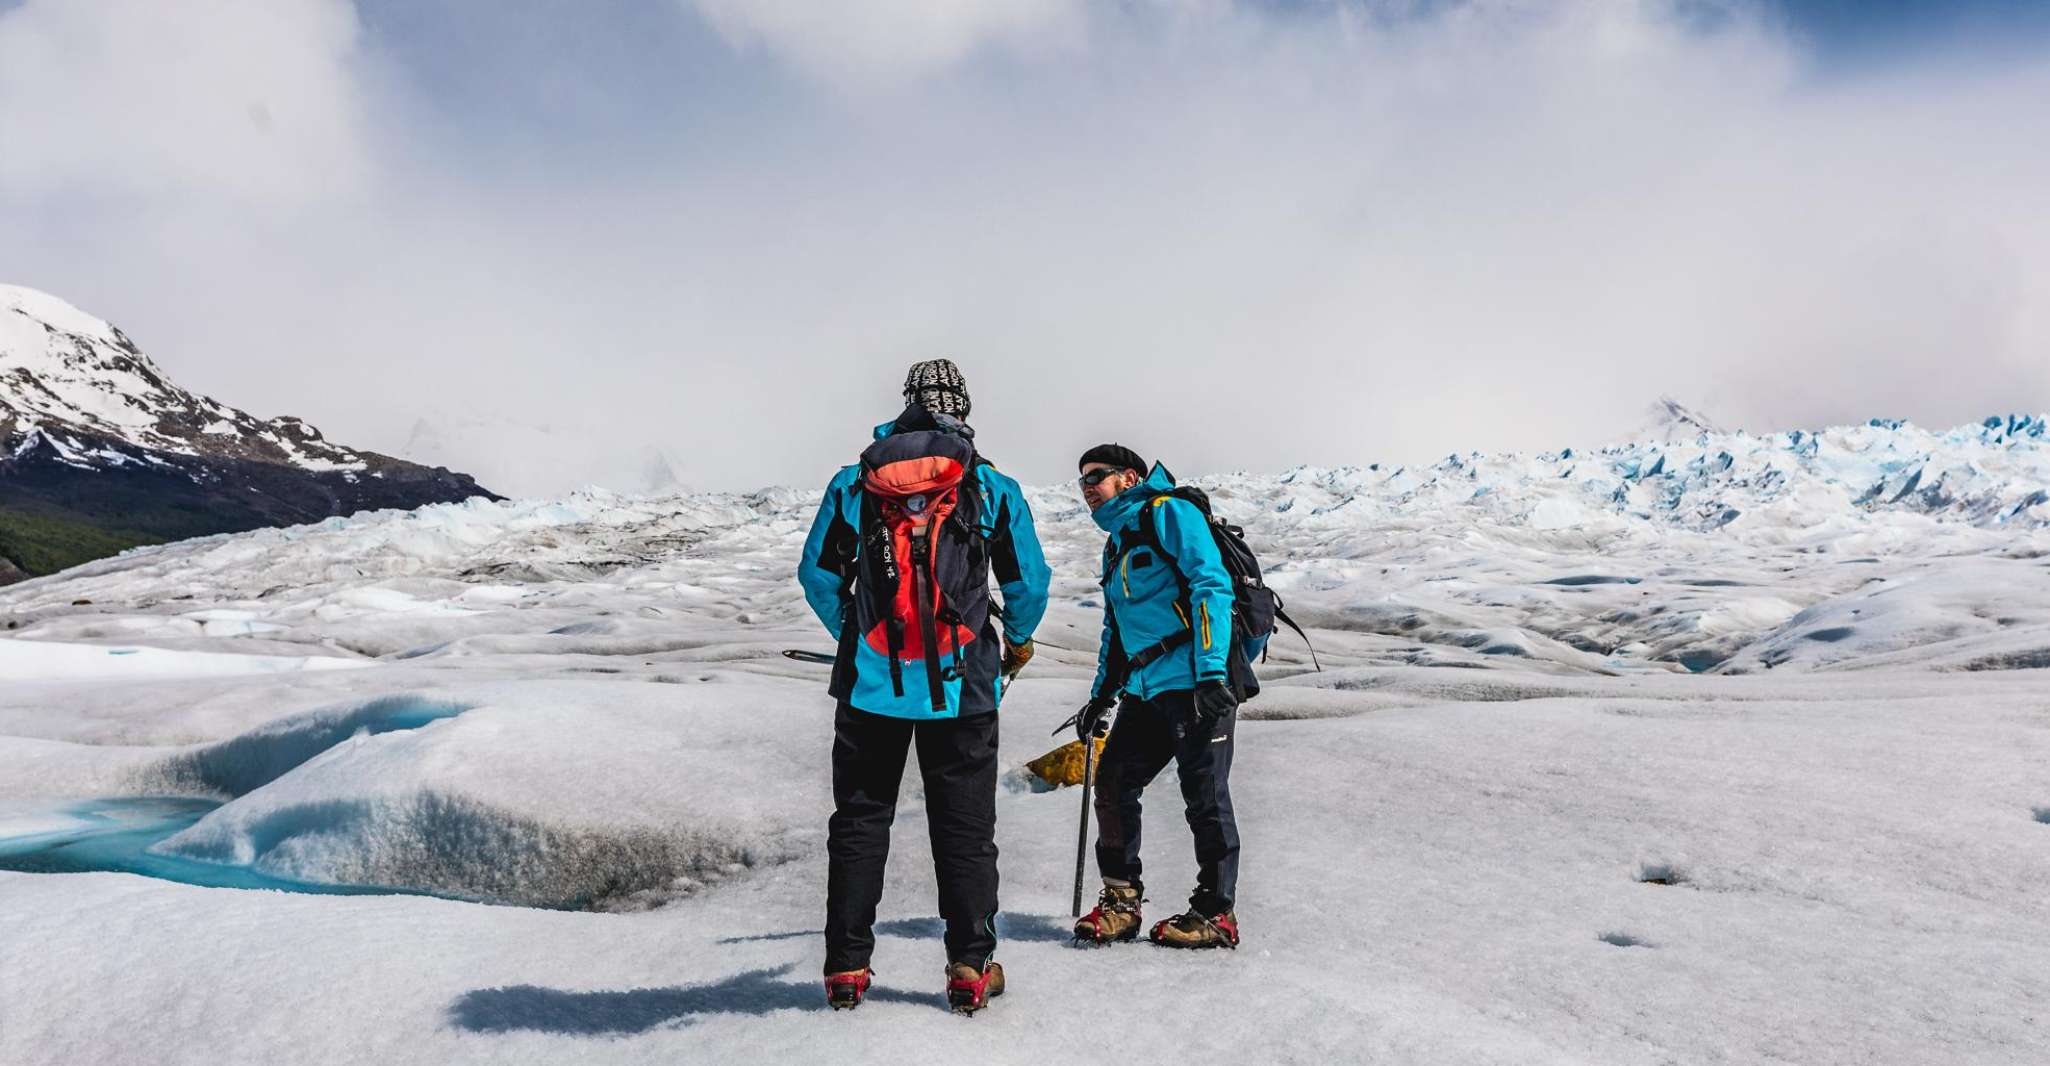 El Calafate, Perito Moreno Glacier Trekking Tour and Cruise - Housity